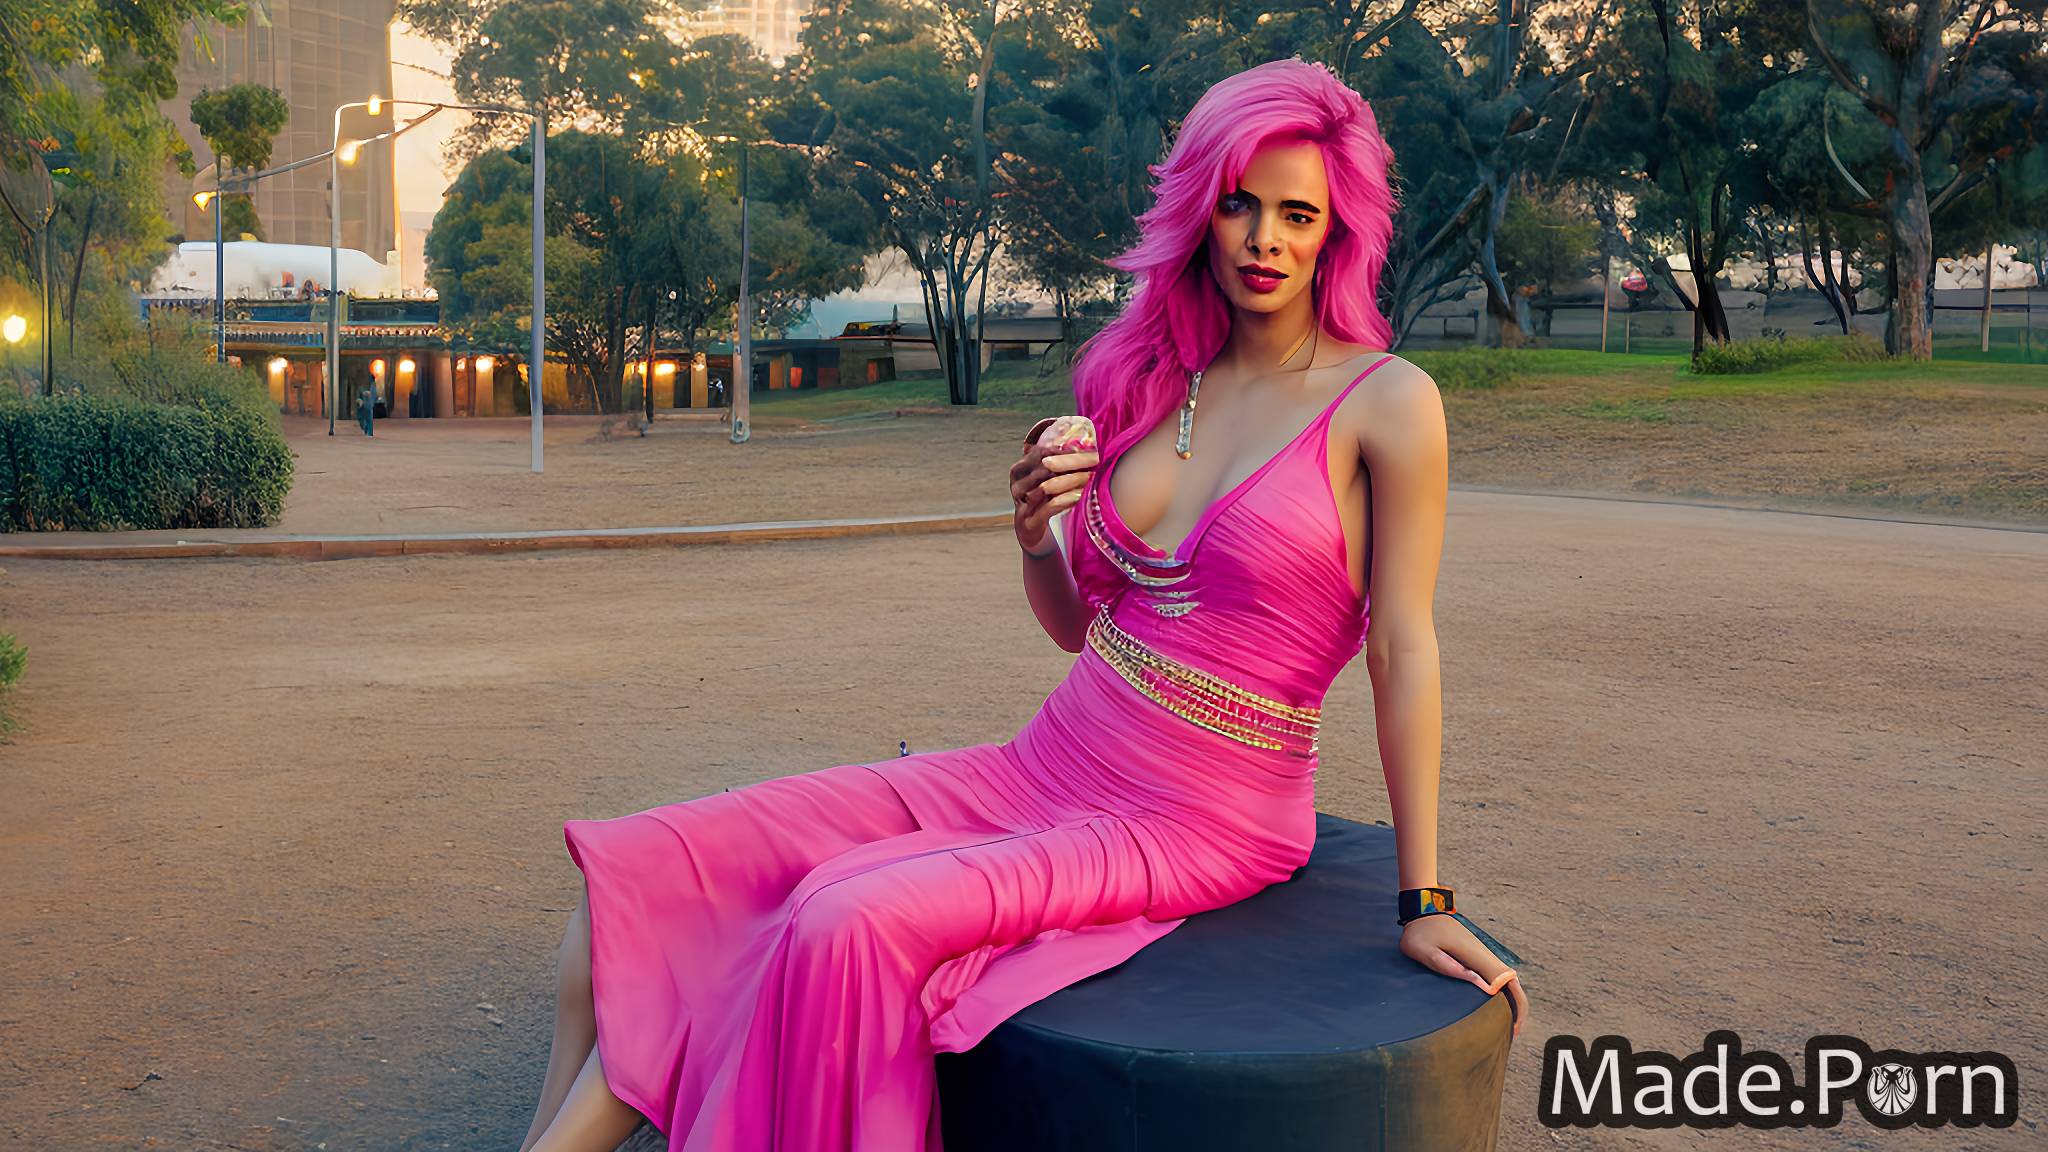 sunset pink hair neon Sydney Opera House zulu shemale movie